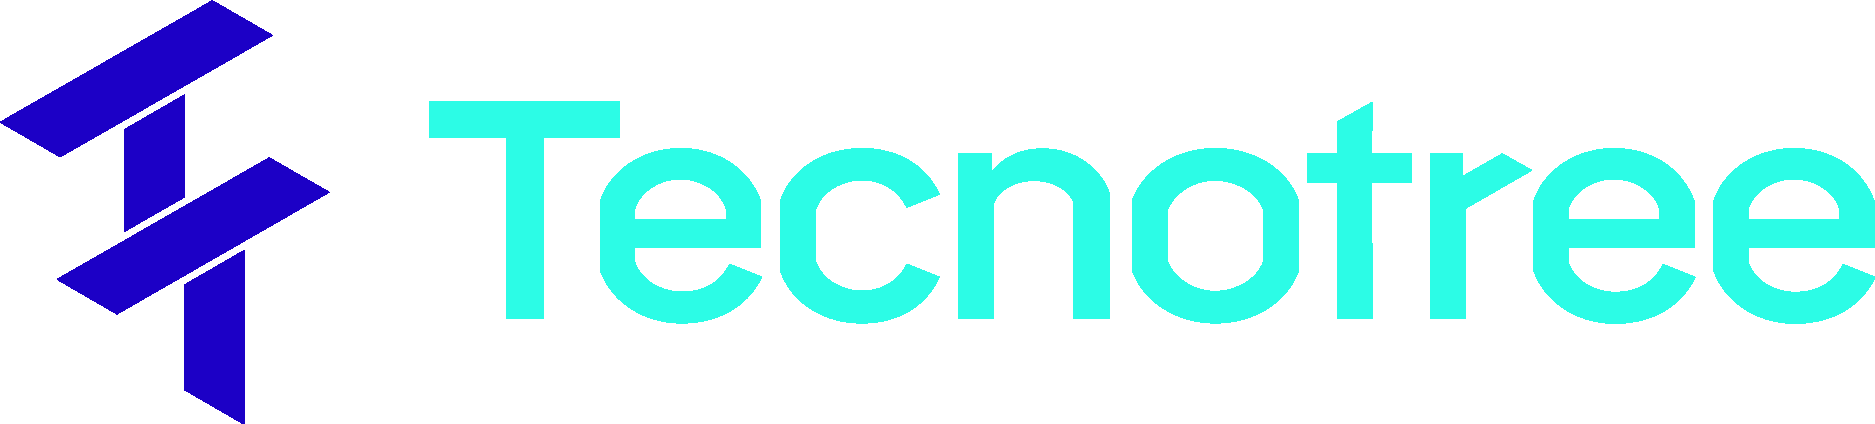 Tecnotree Logo Vector - (.Ai .PNG .SVG .EPS Free Download)